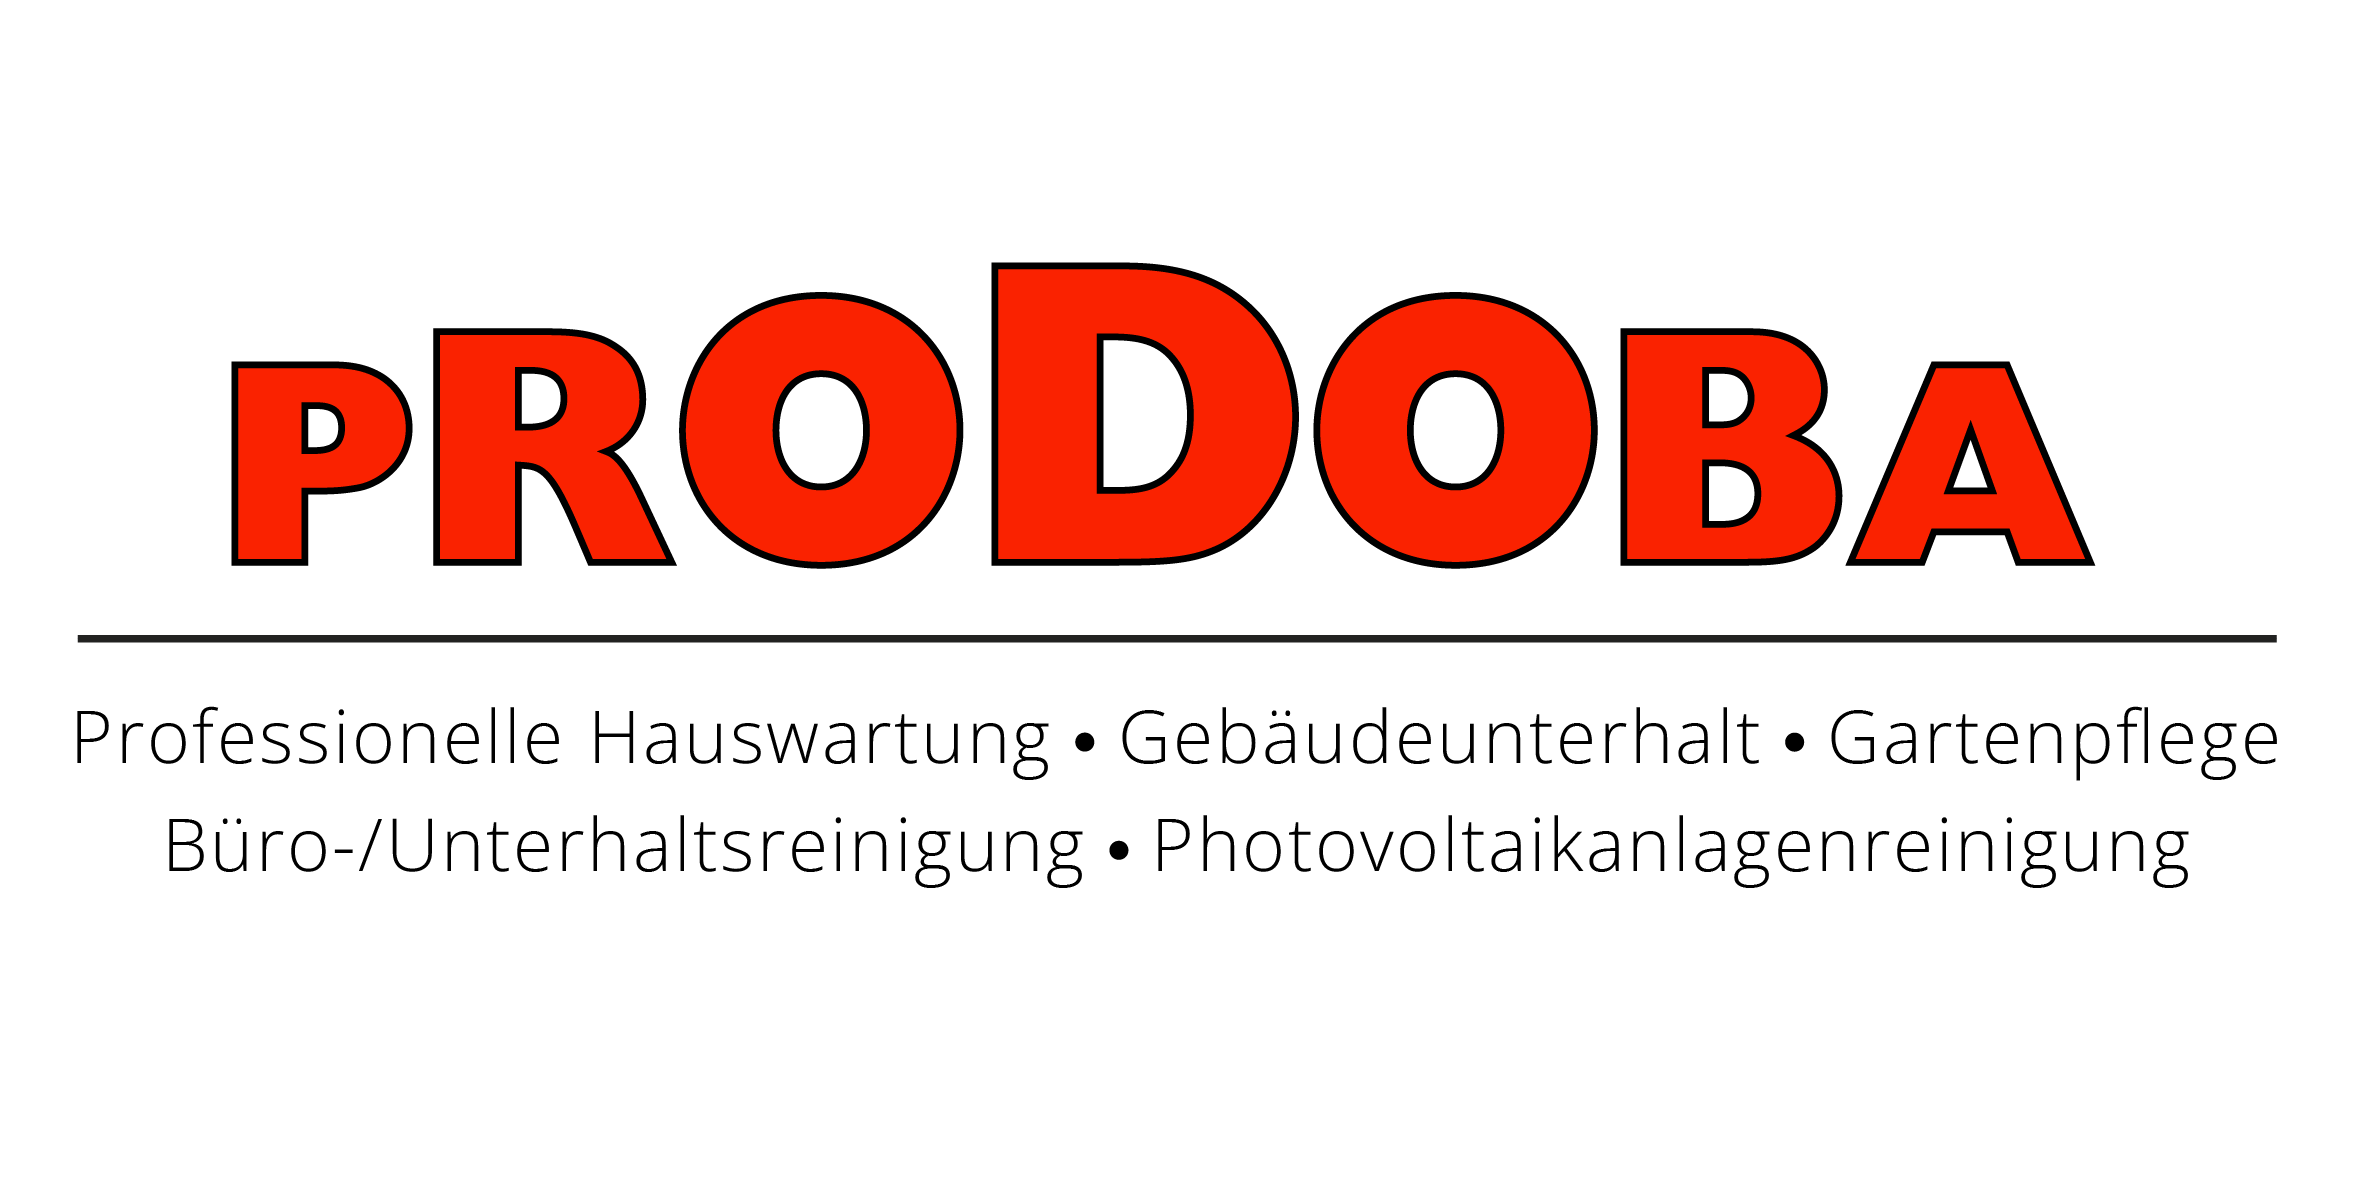 Prodoba_Logo_mitText_RGB